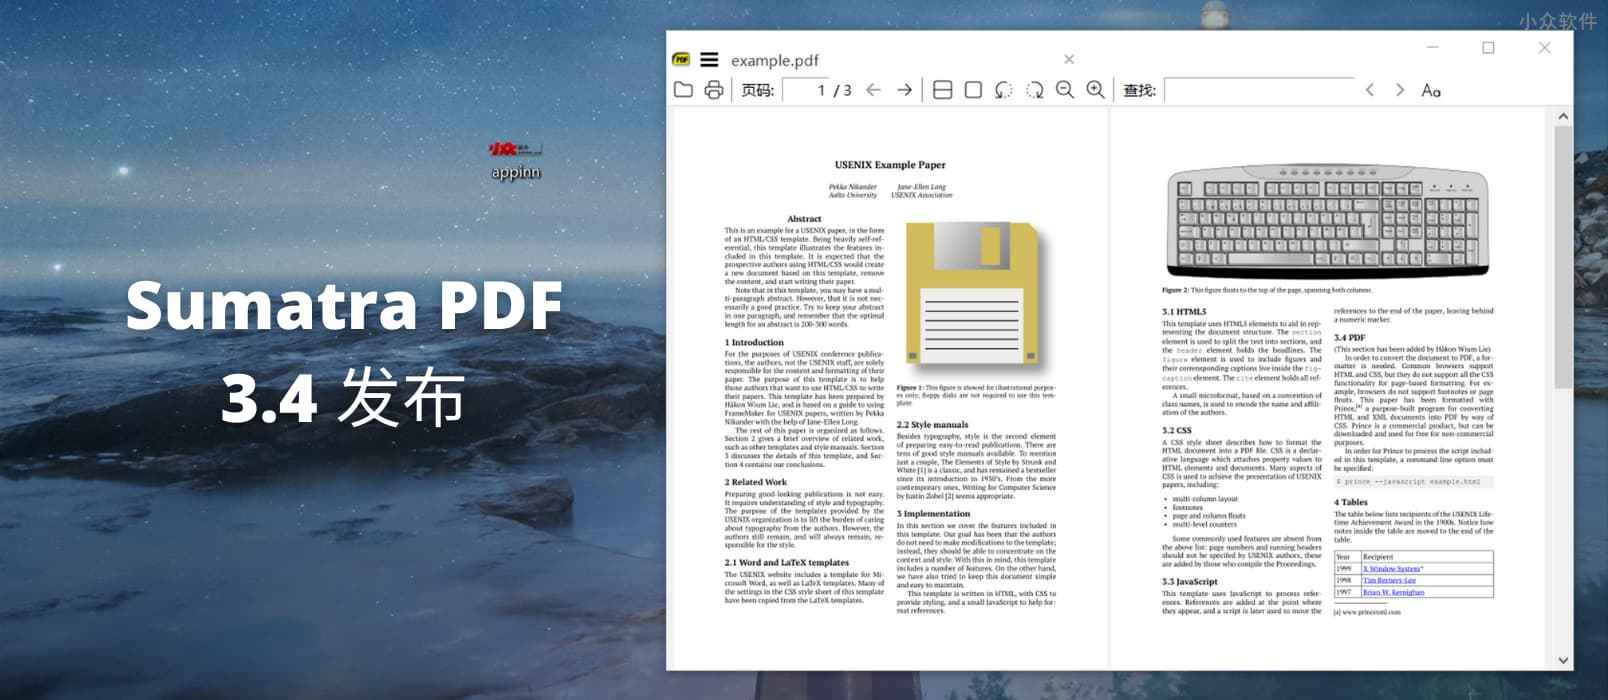 Sumatra PDF 3.4 版本发布，新增命令行、自定义快捷键、mupdf 引擎、网络翻译等功能 1